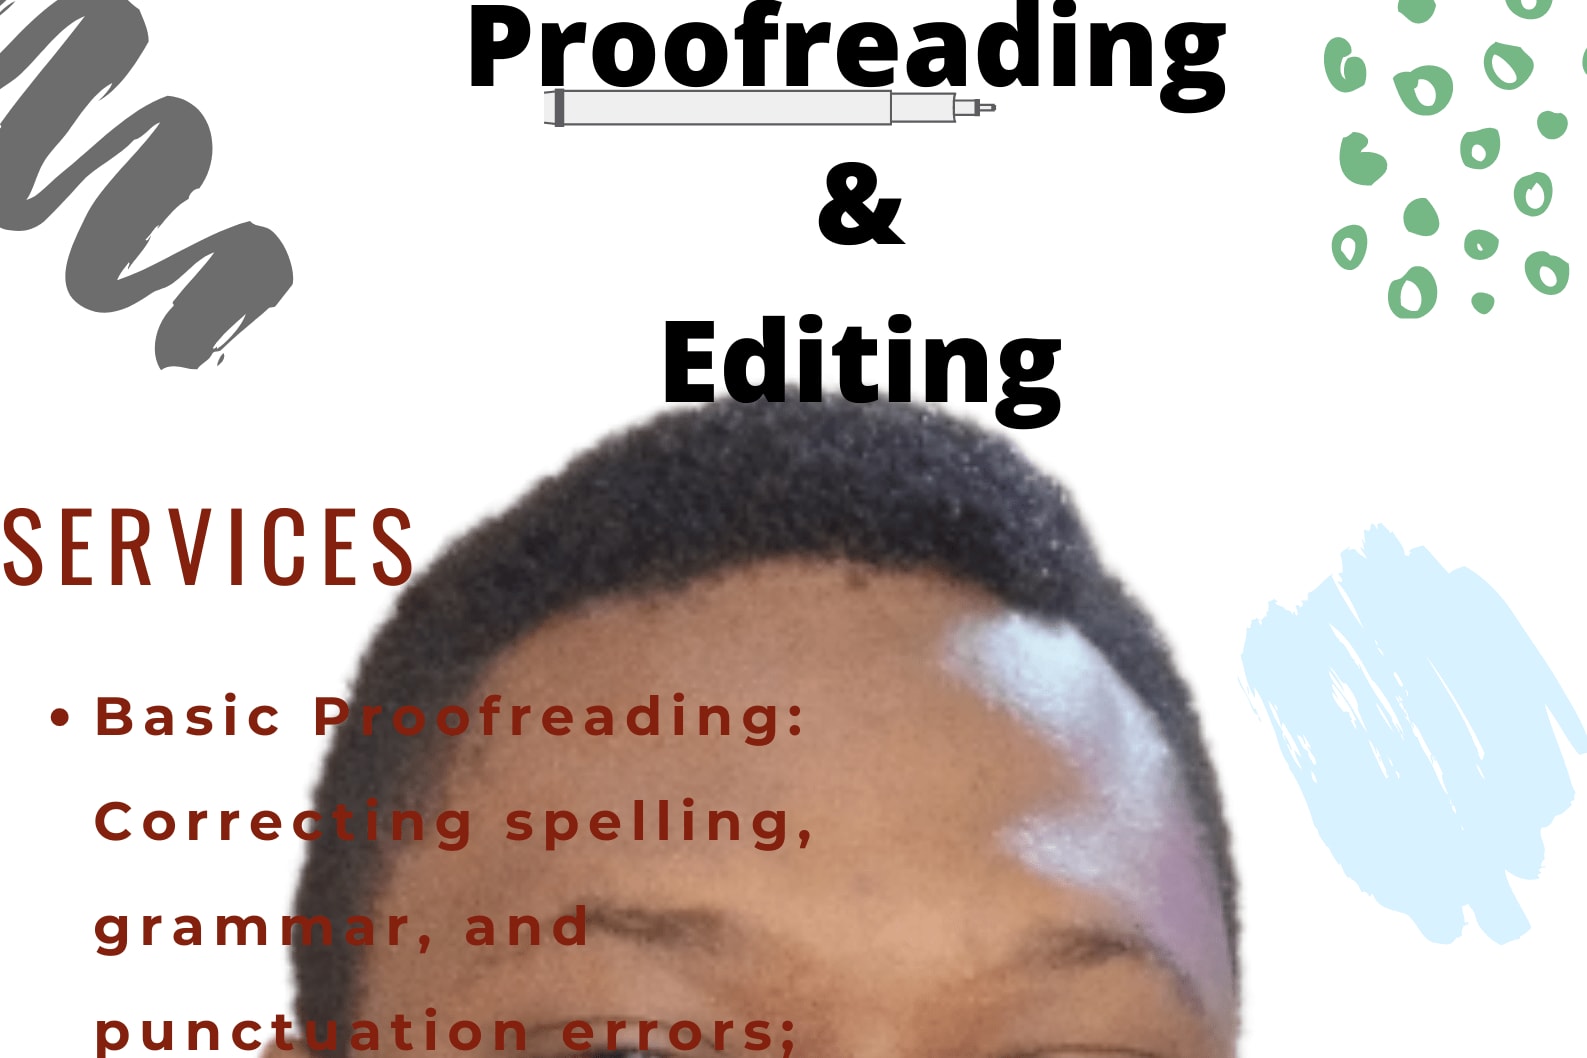 Portfolio for content editing, proofreading